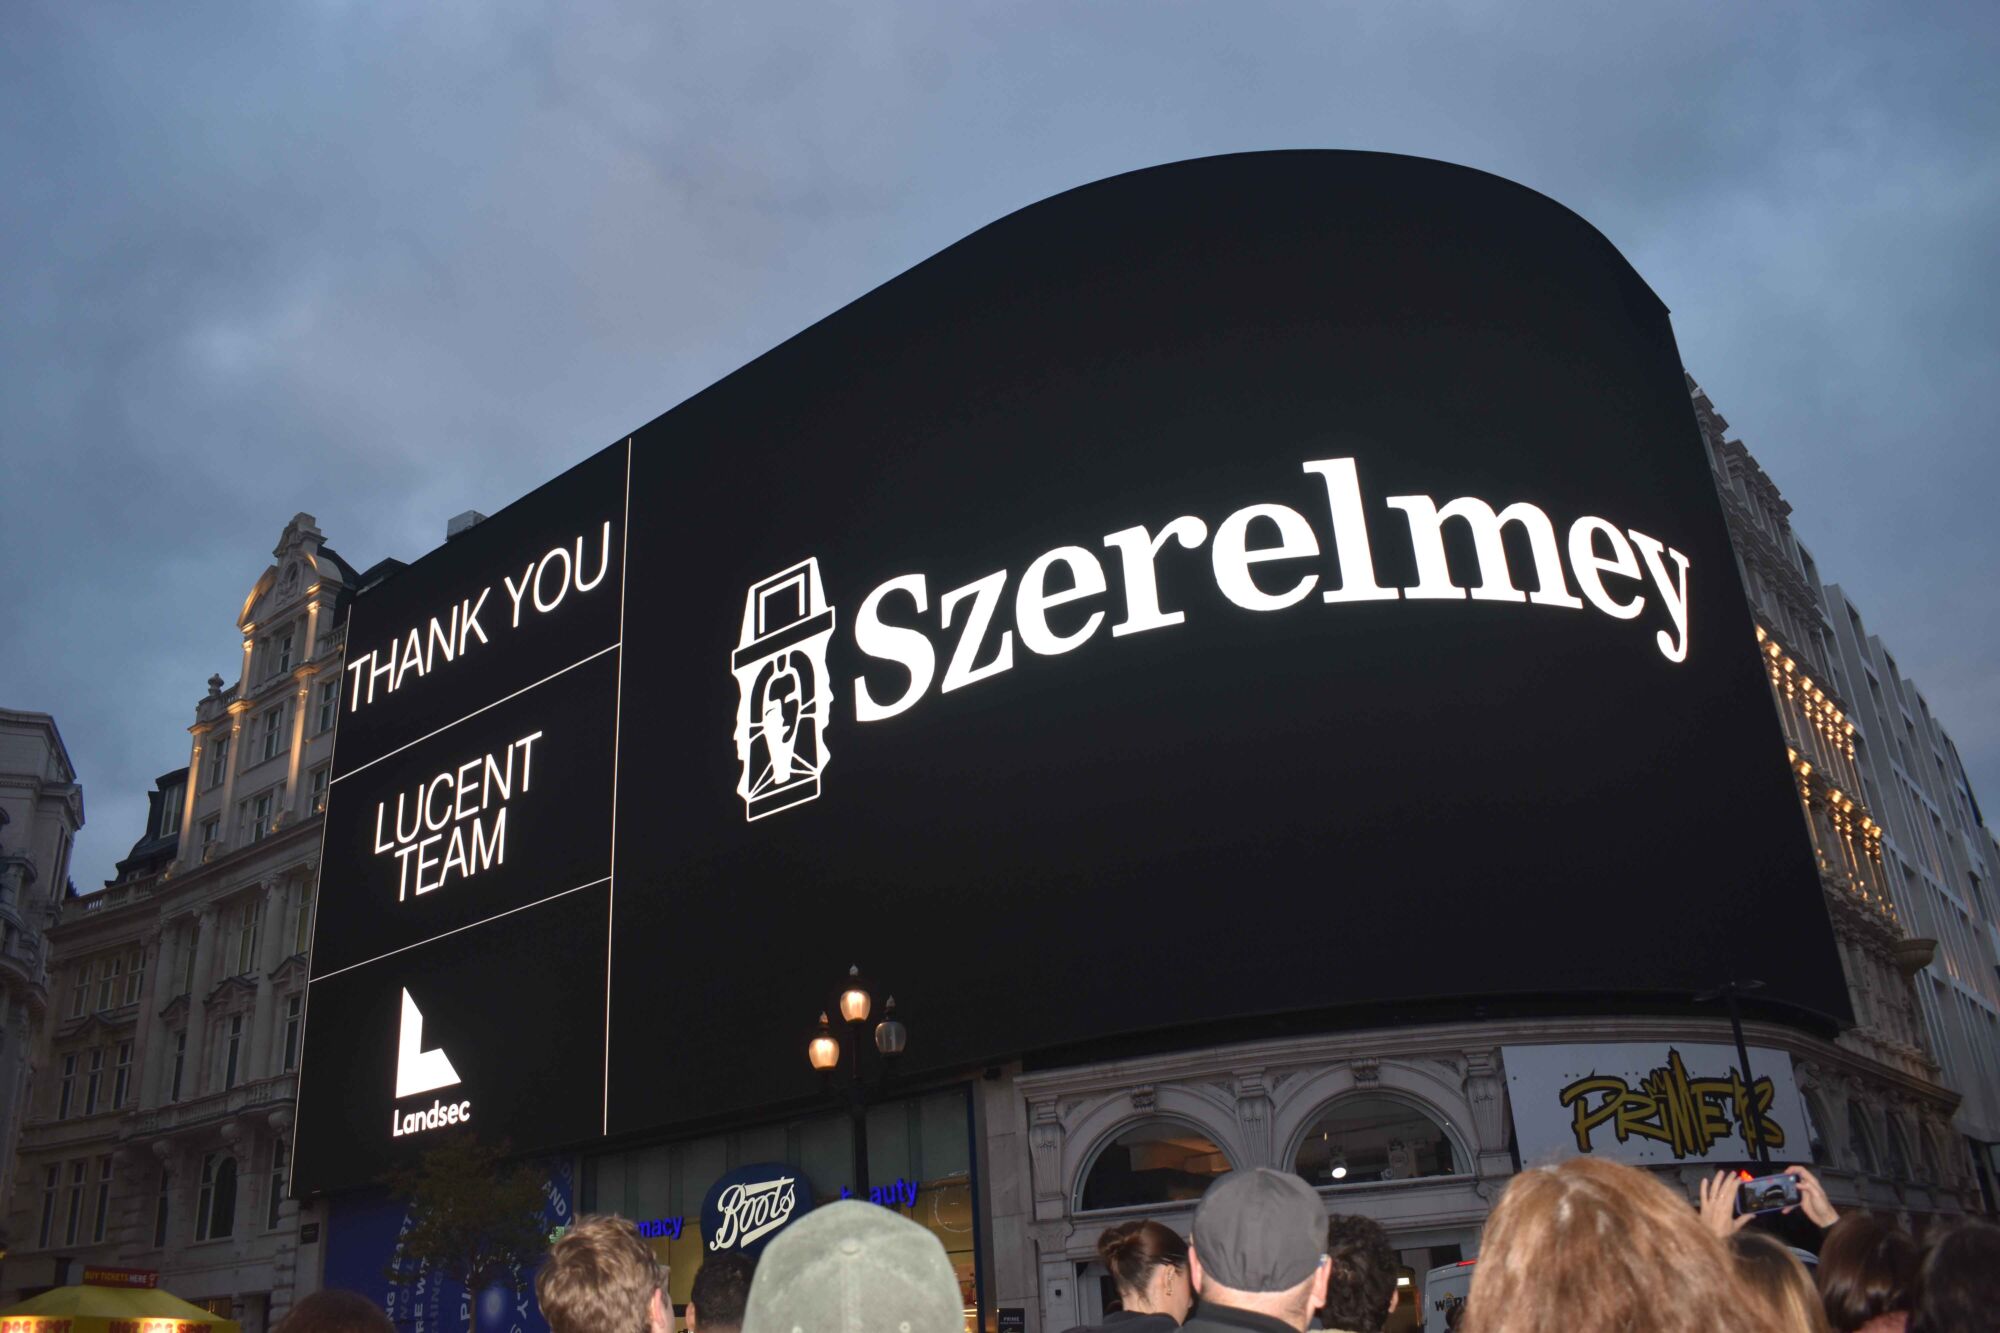 Finesse 2020-21 Showcase - Szerelmey